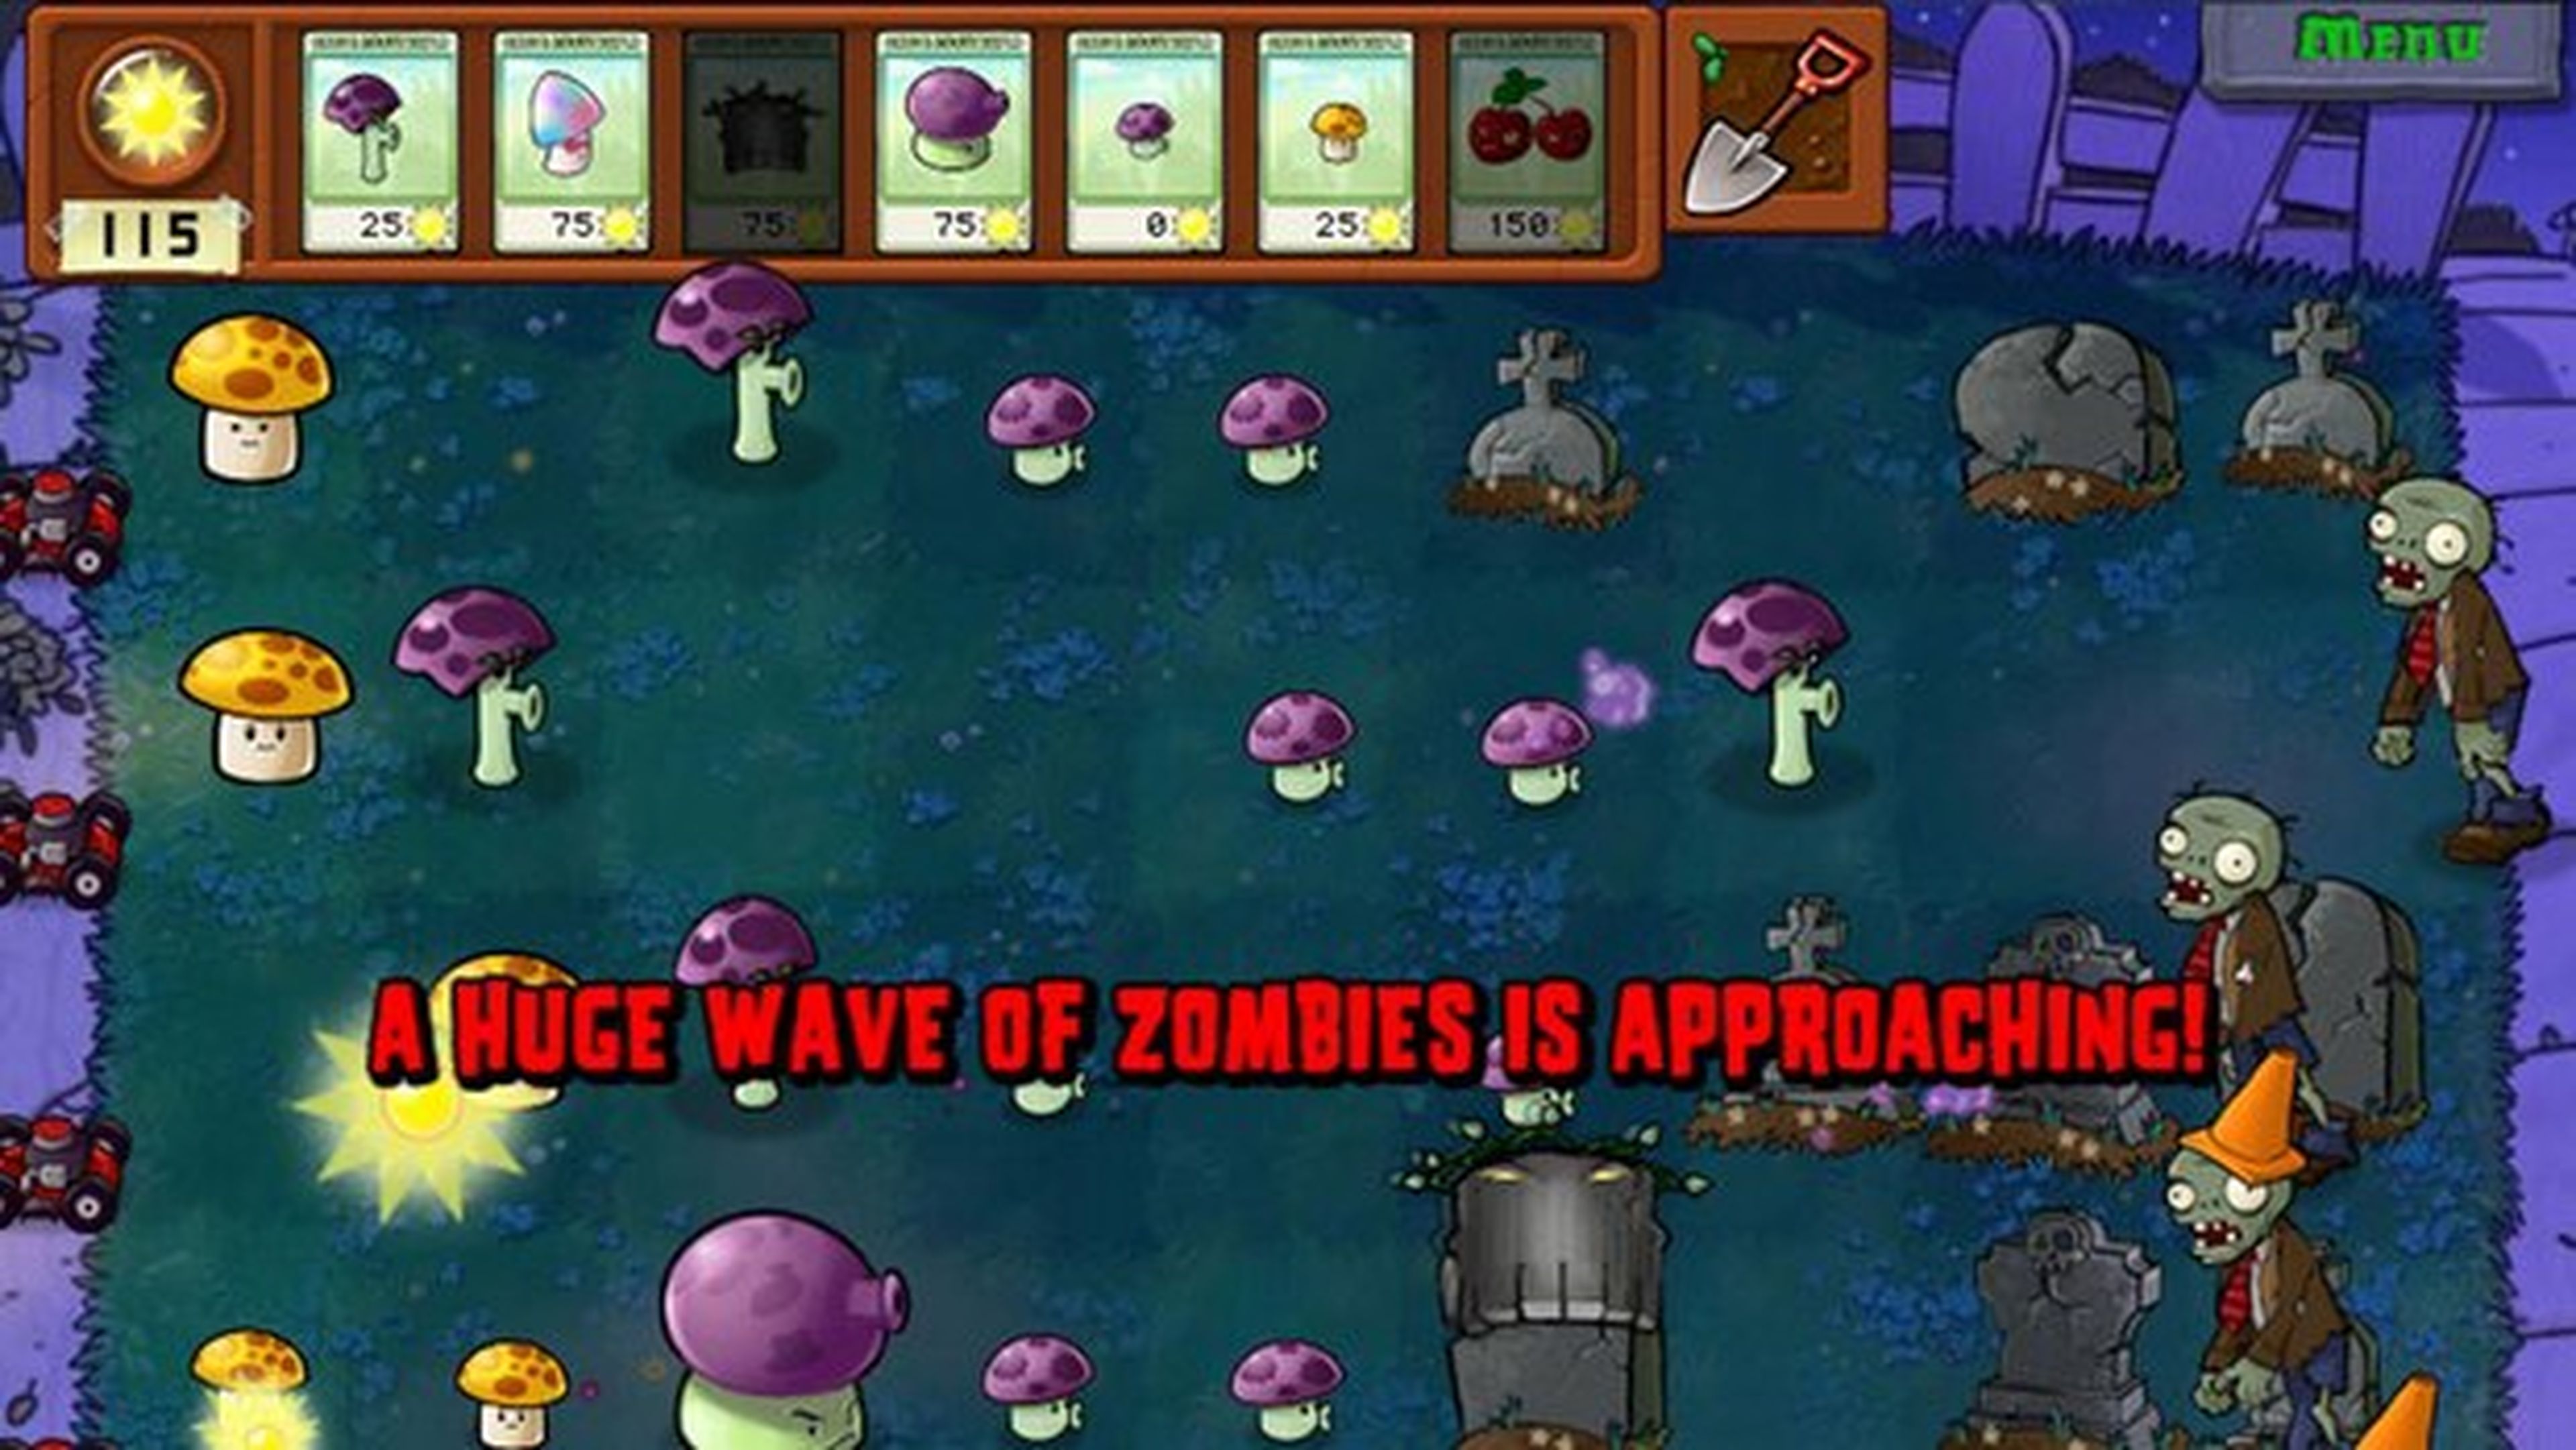 Descarga Plants vs. Zombies gratis en Origin